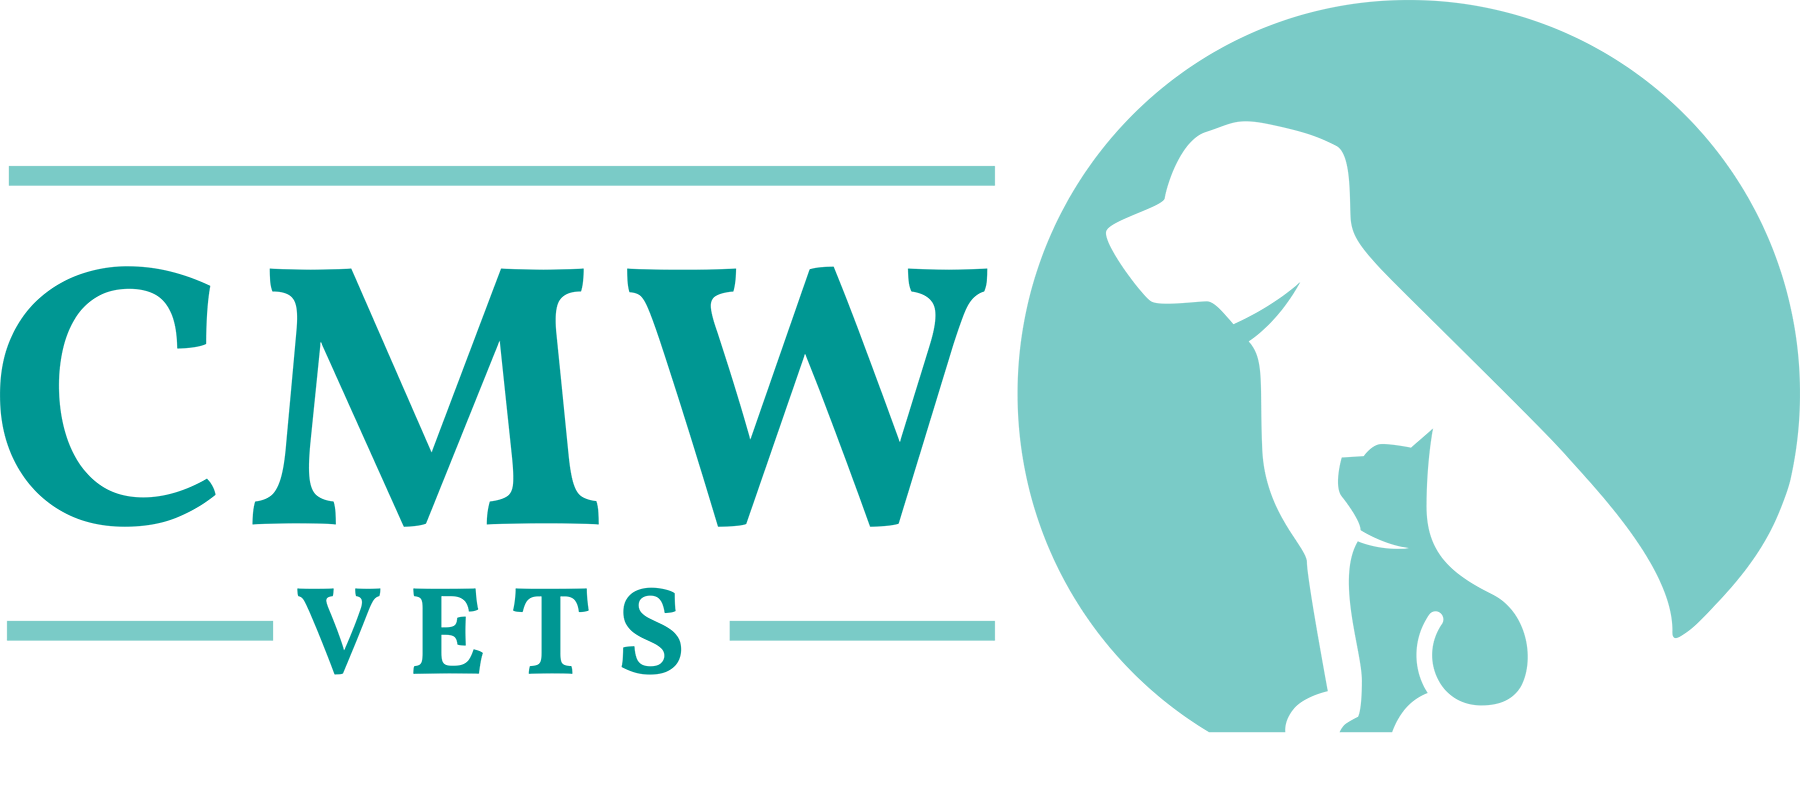 CMWV Ltd. Trading as CMW Vets